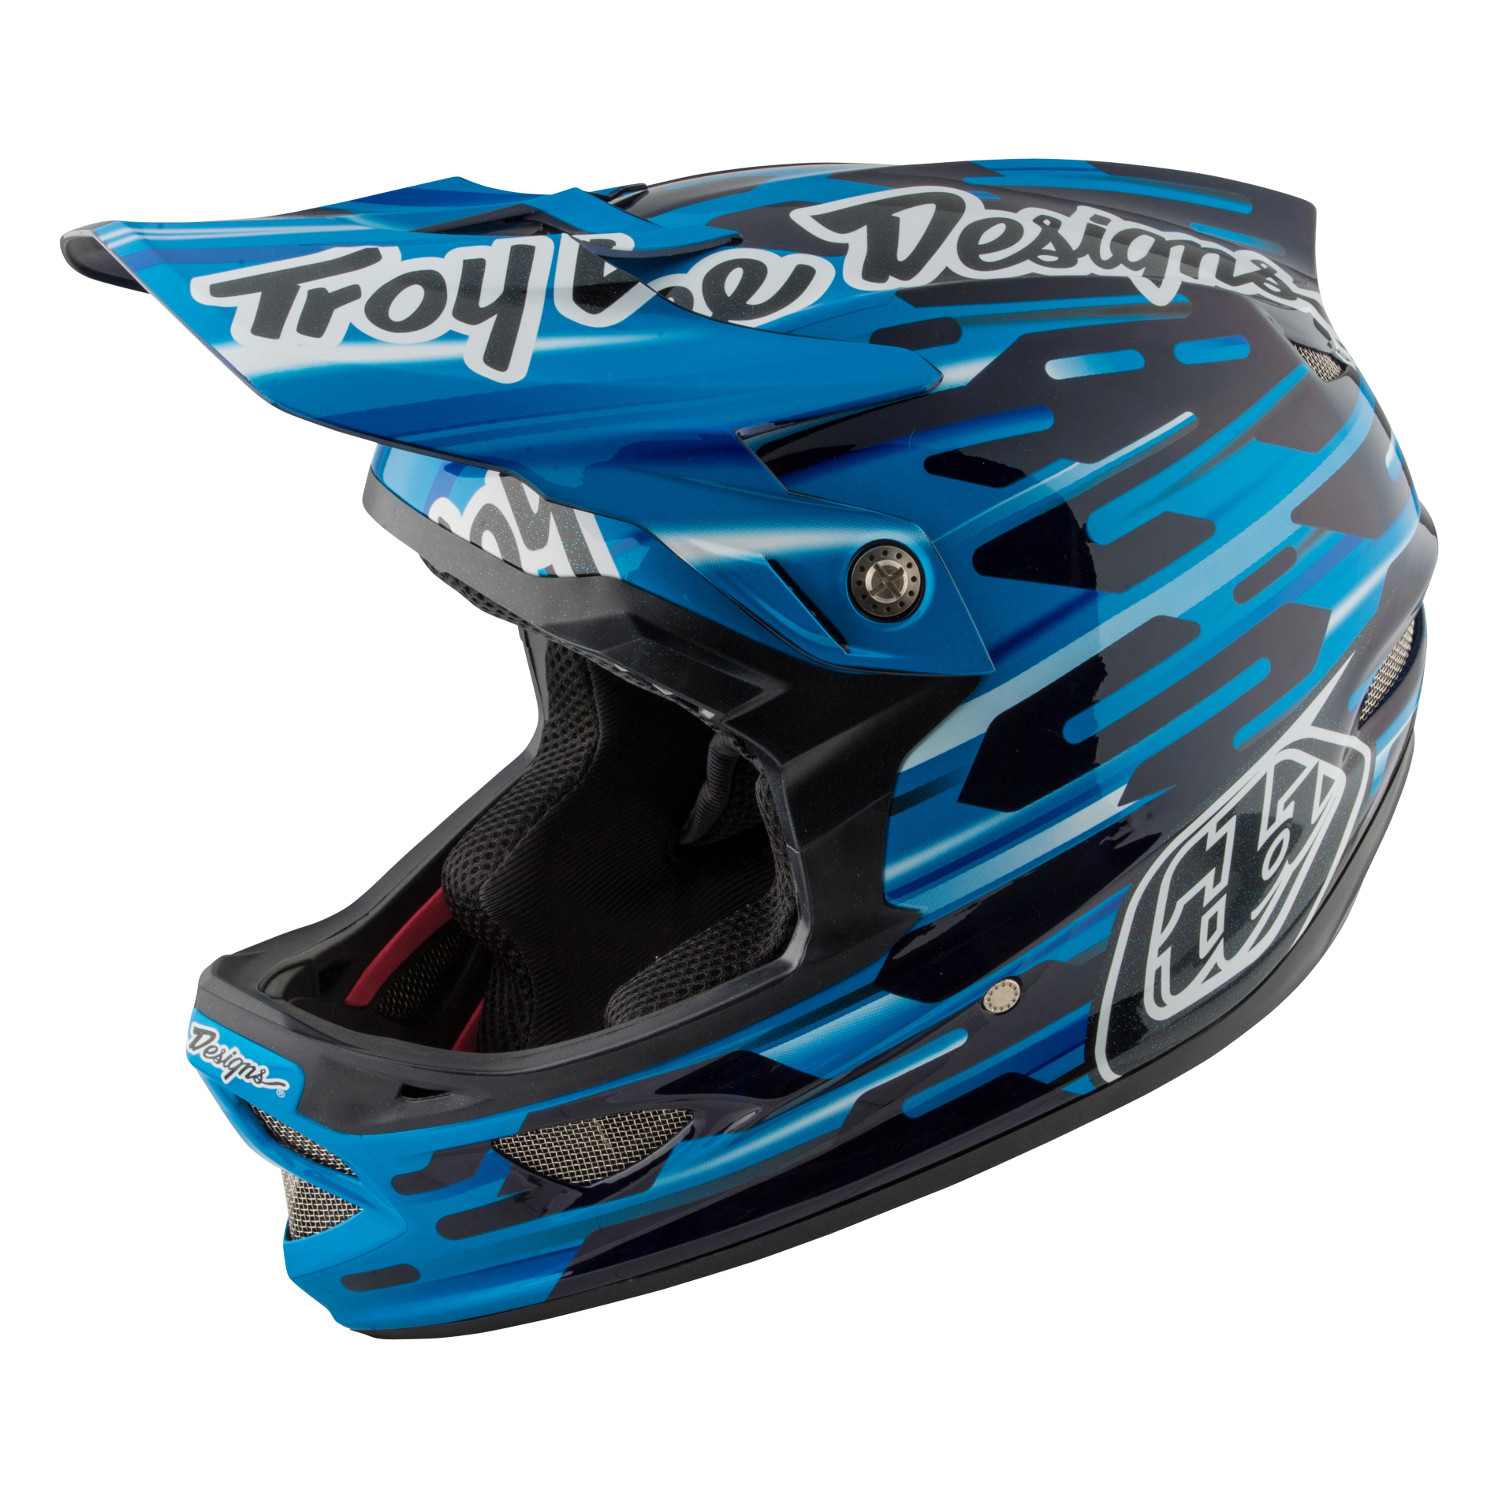 Troy Lee Designs Downhill-MTB Helmet D3 Carbon Code Blue